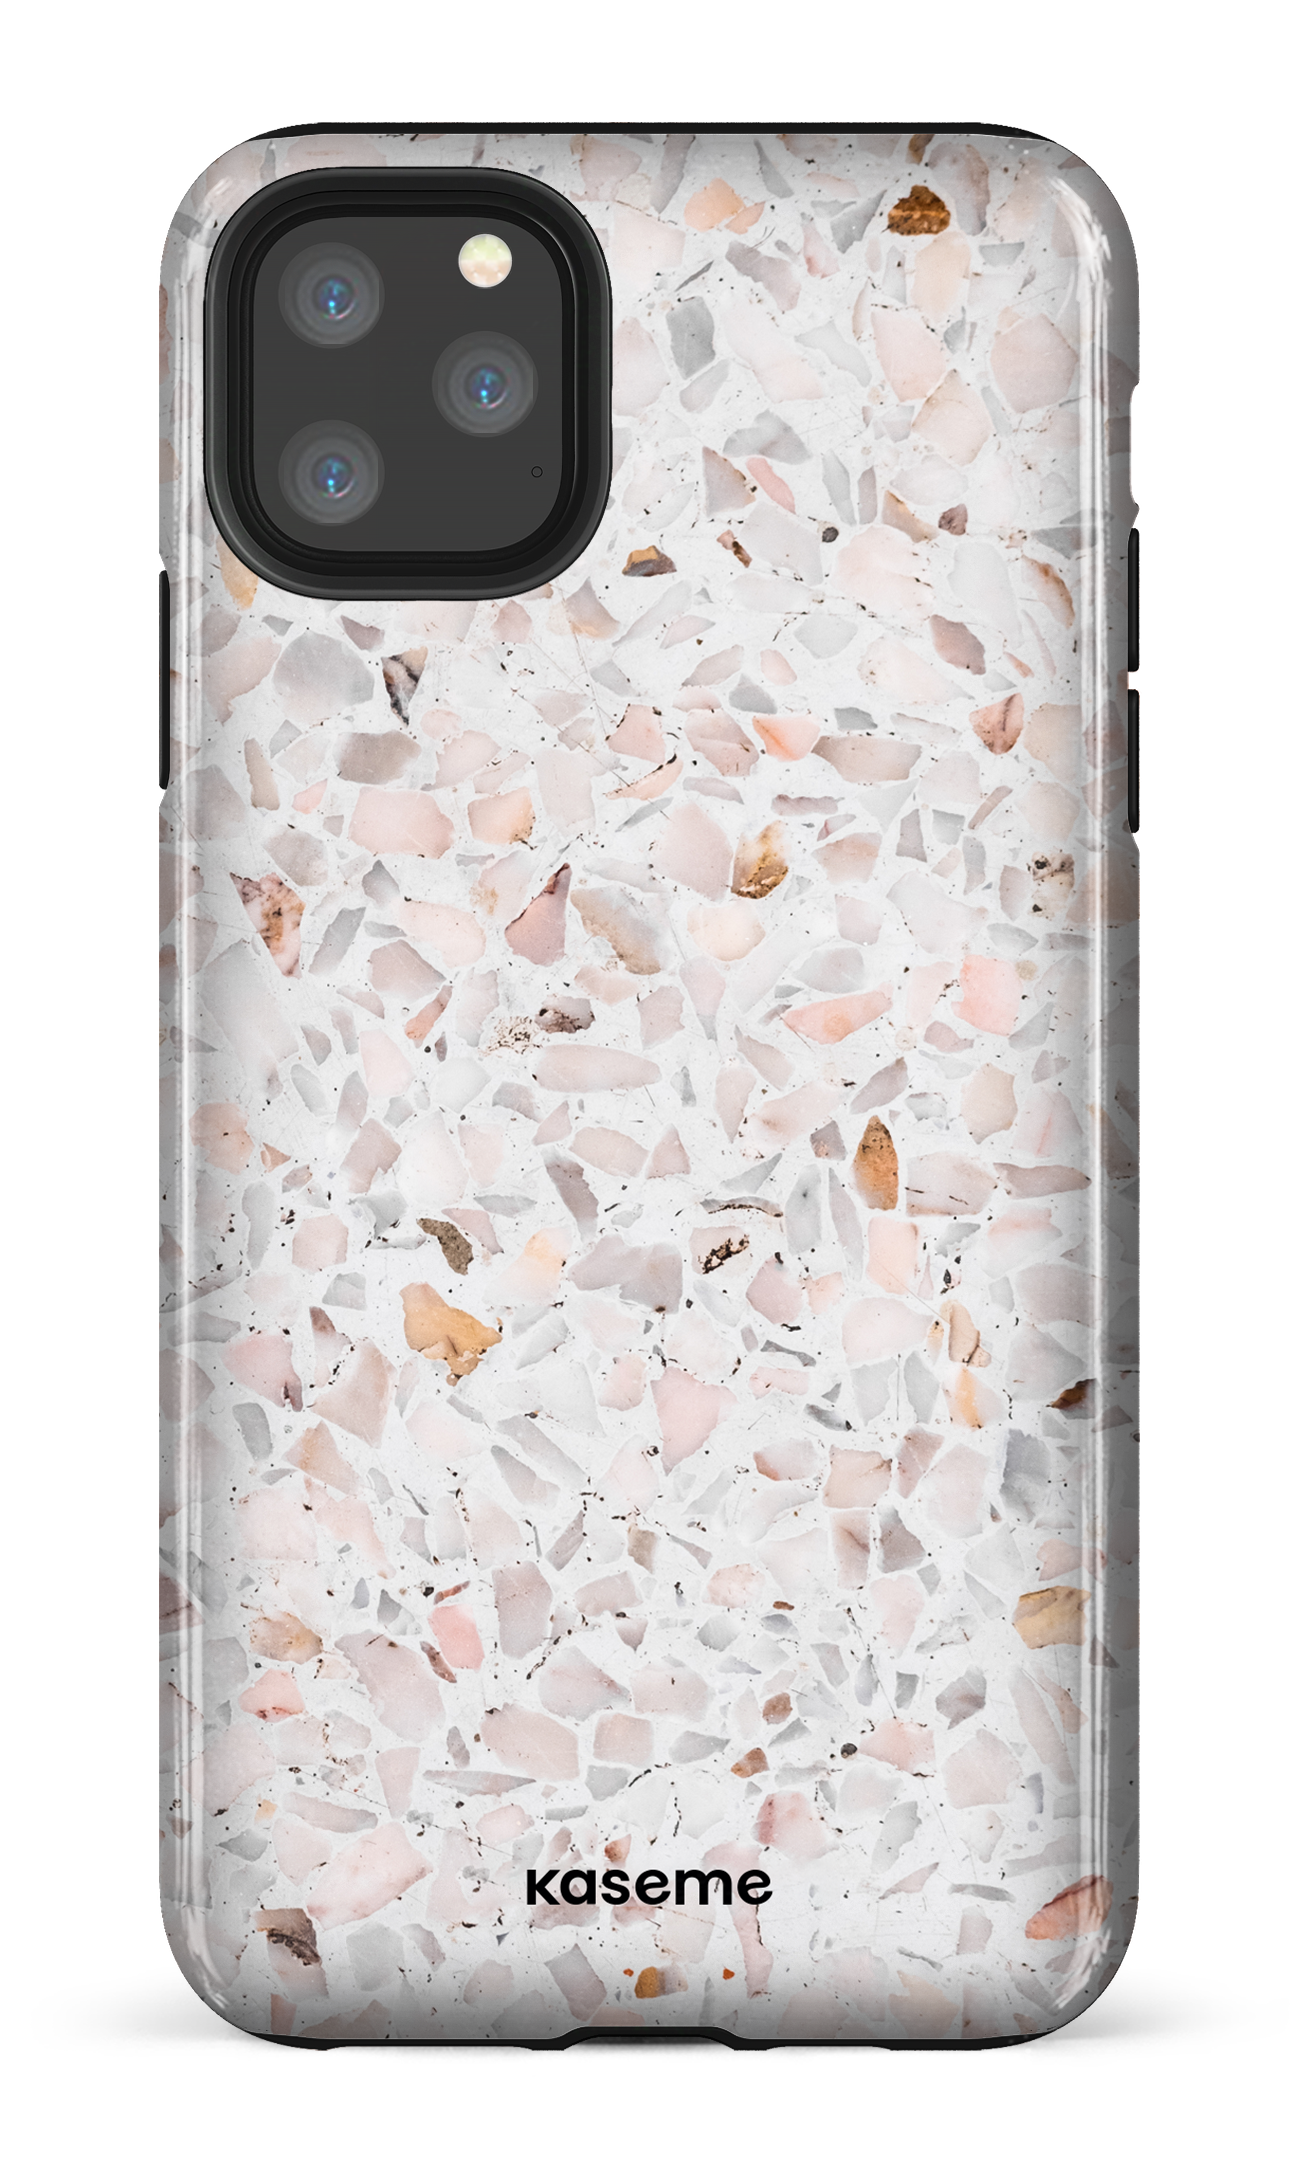 Frozen stone - iPhone 11 Pro Max